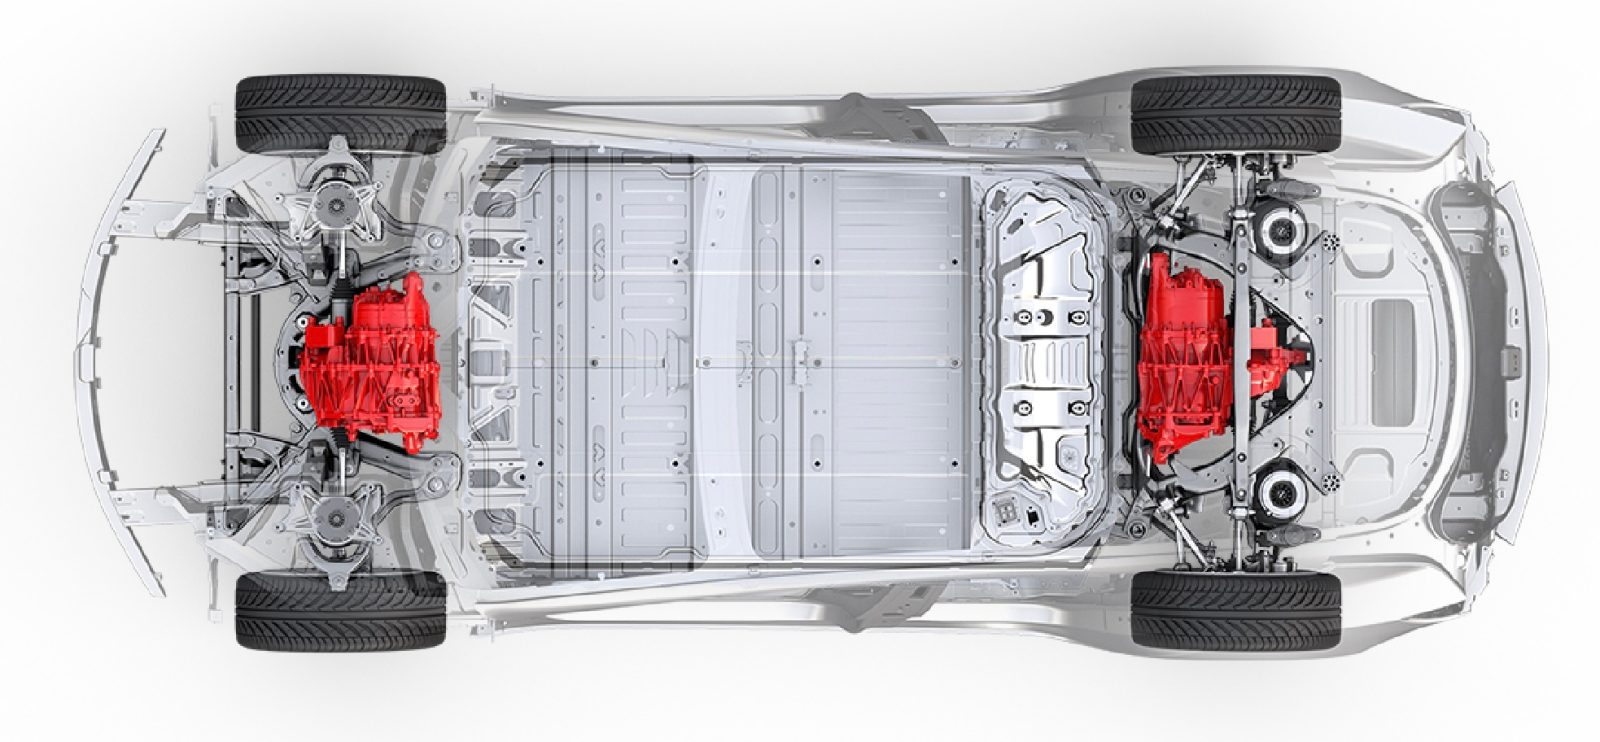 Tesla Model 3 dual motor design leaks in latest design studio update